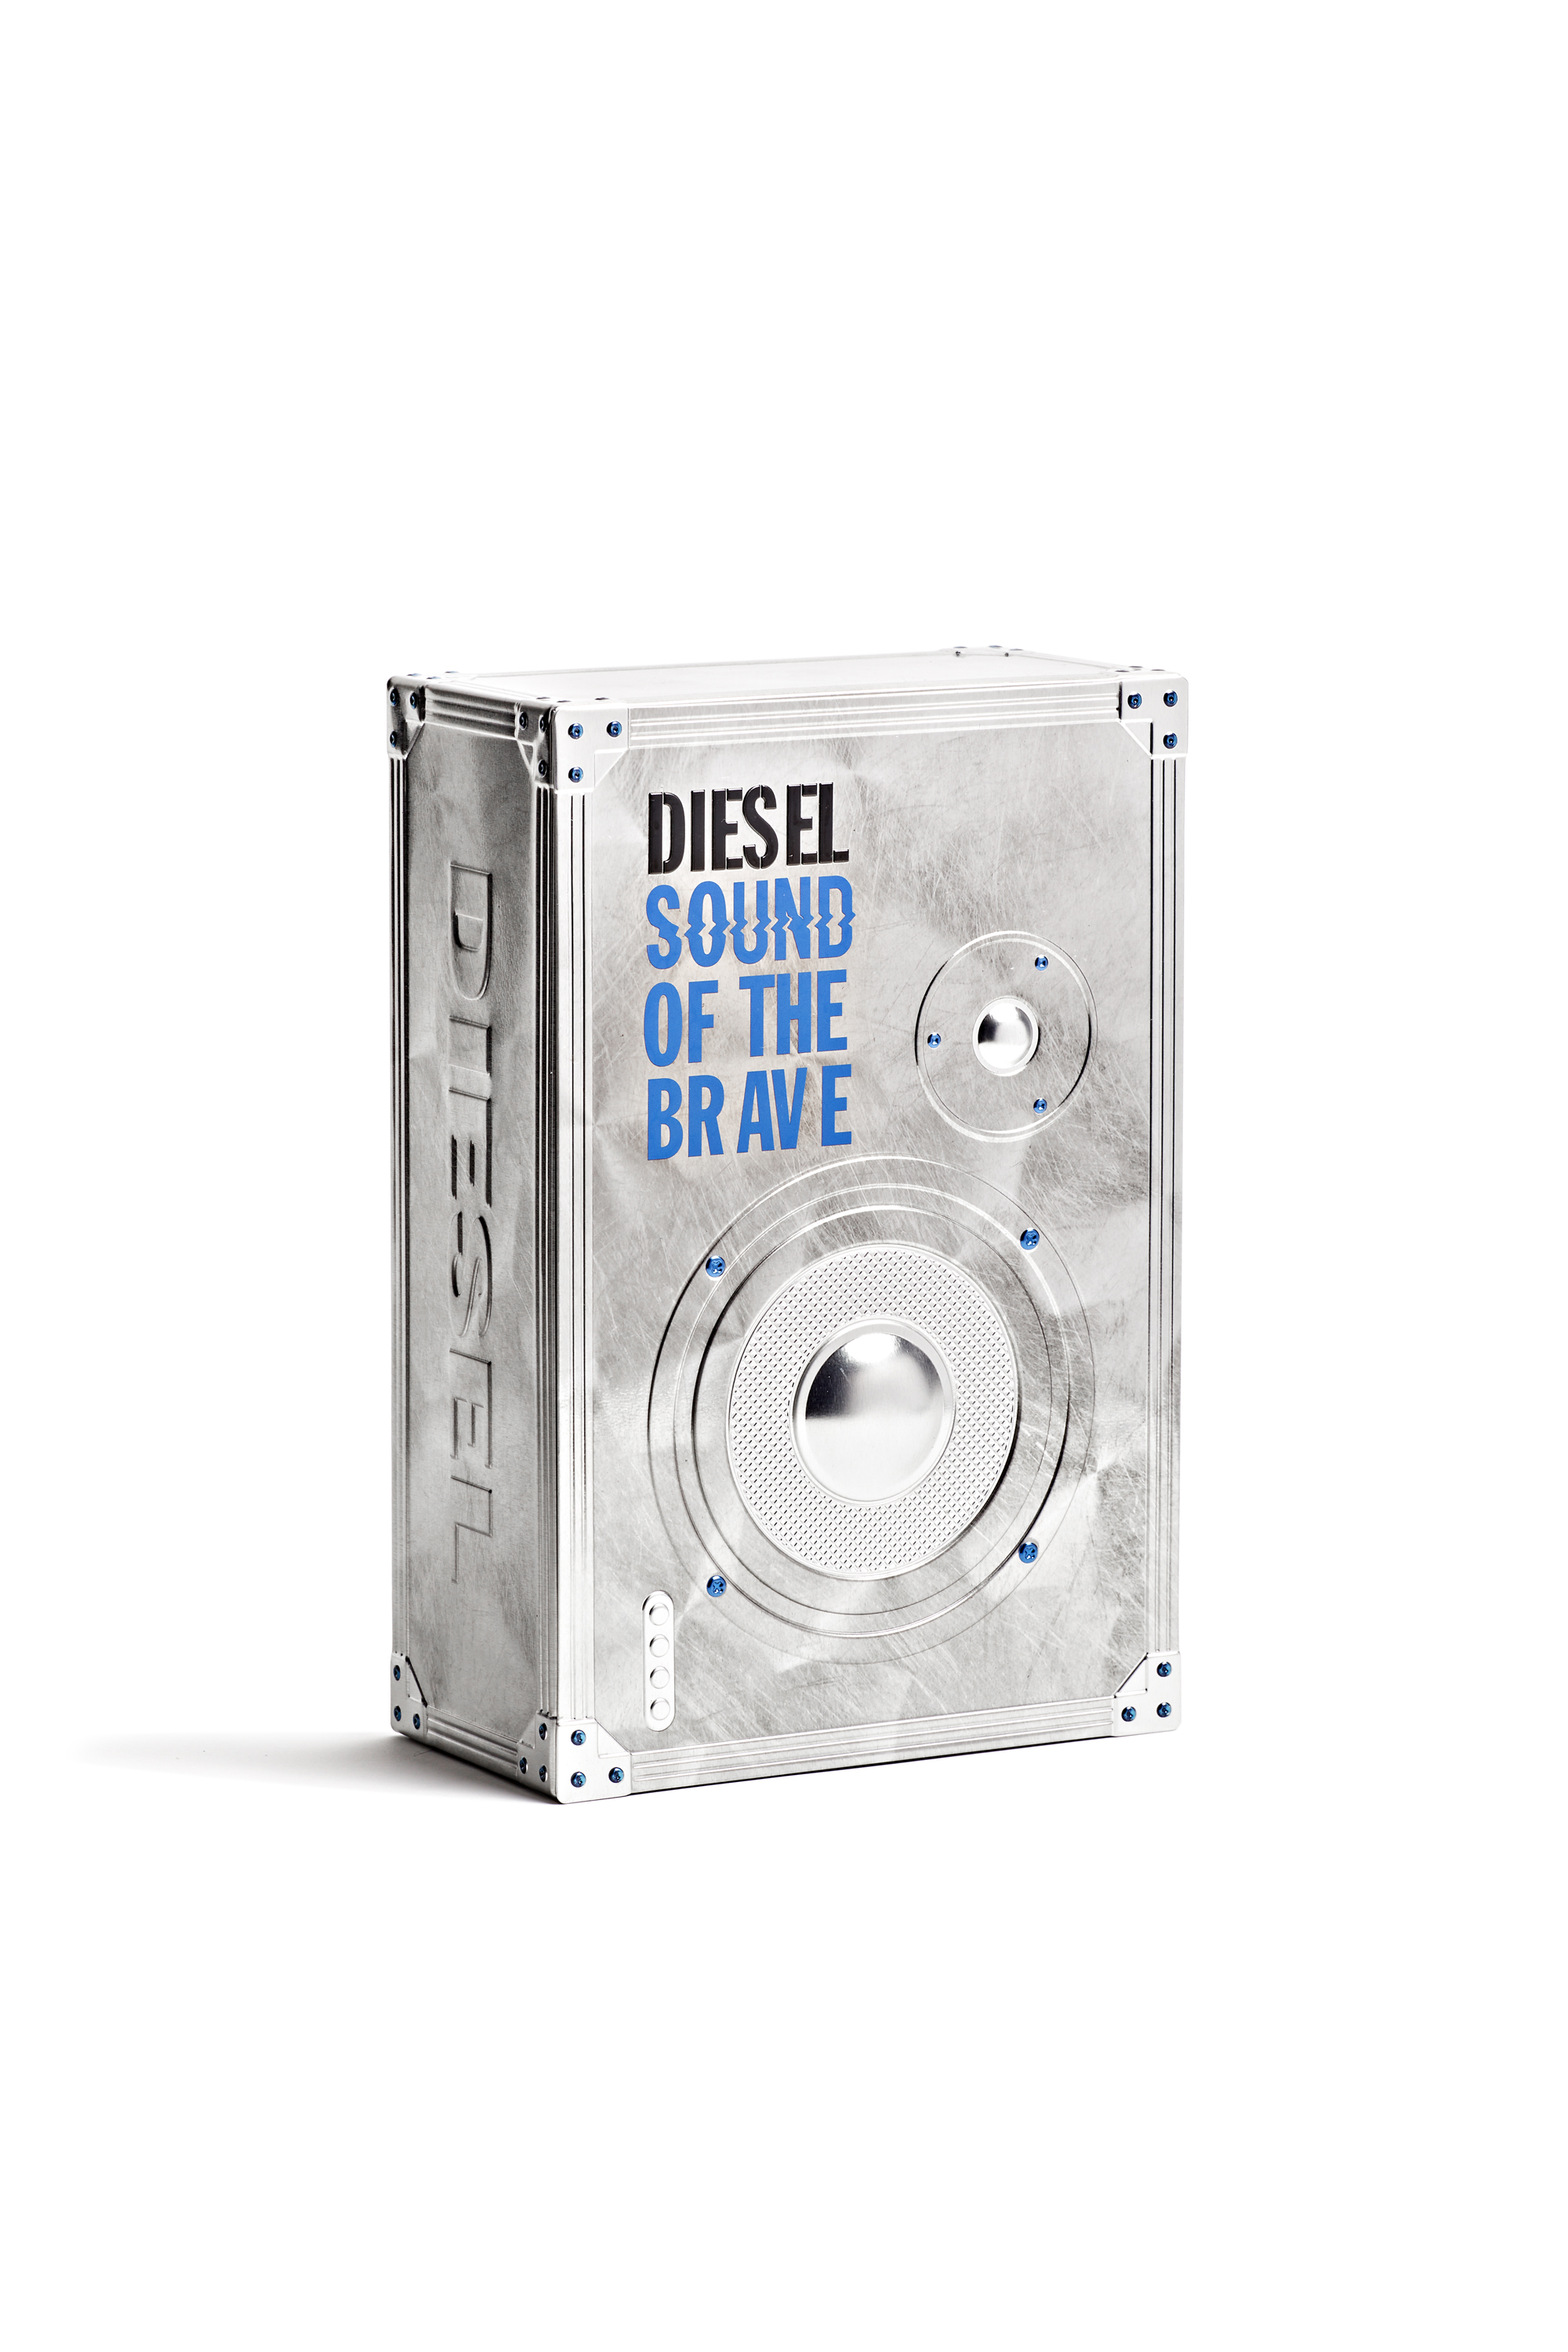 Diesel - SOUND OF THE BRAVE 75 ML PREMIUM BOX,  - Image 2